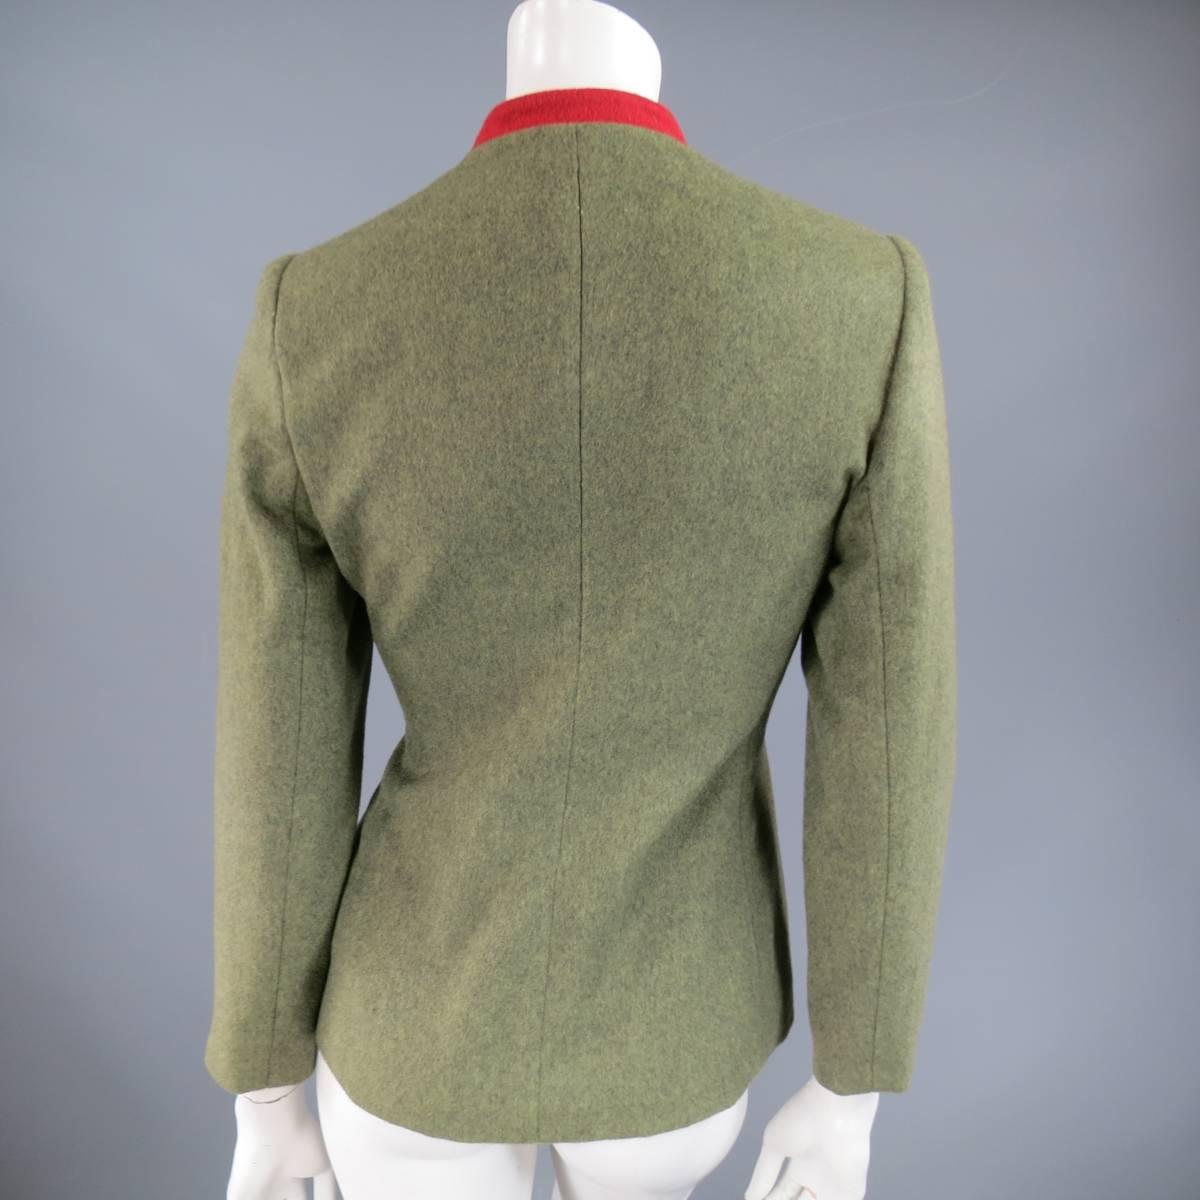 CAROLINA HERRERA Size 4 Green & Red Wool / Cashmere Heart Jacket Skirt Suit 1